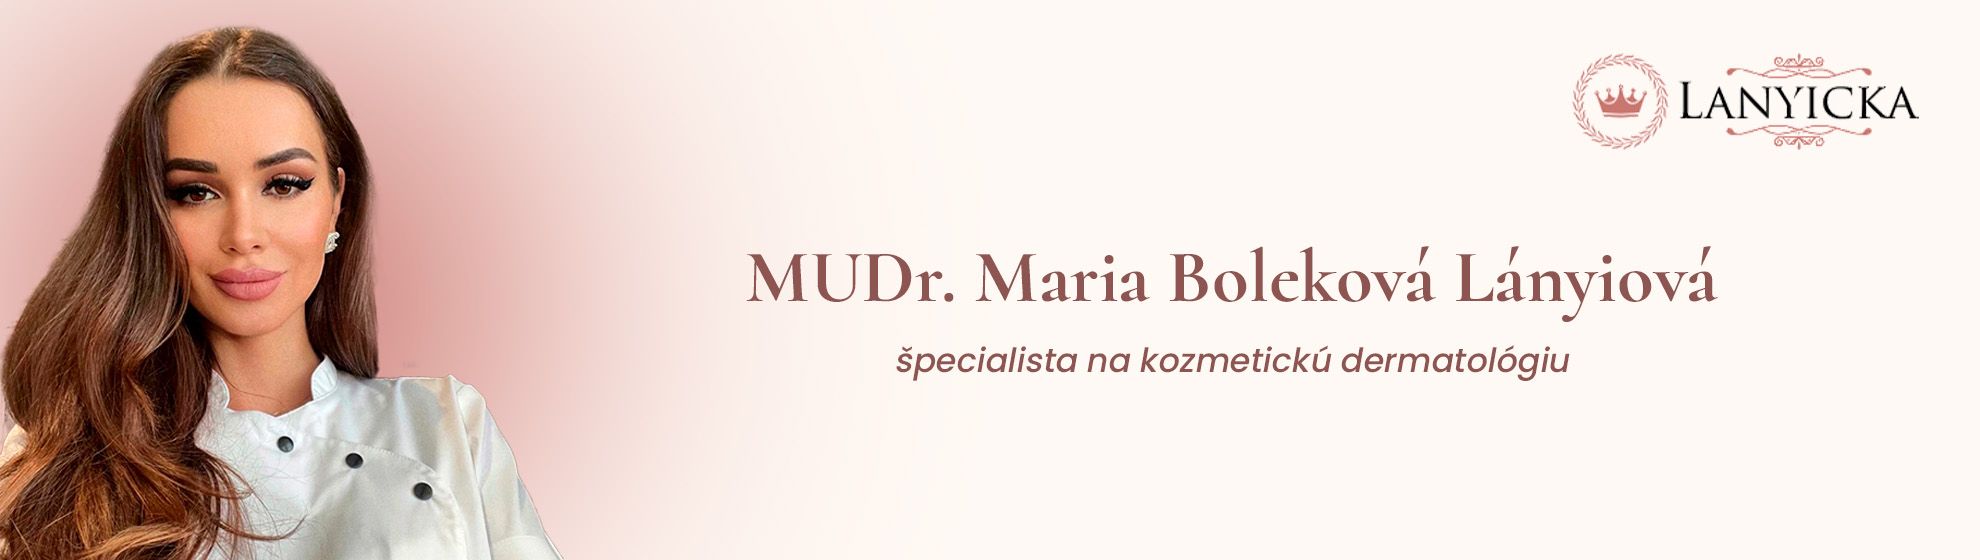 MUDr. Mária Boleková Lányiová - Lanyicka